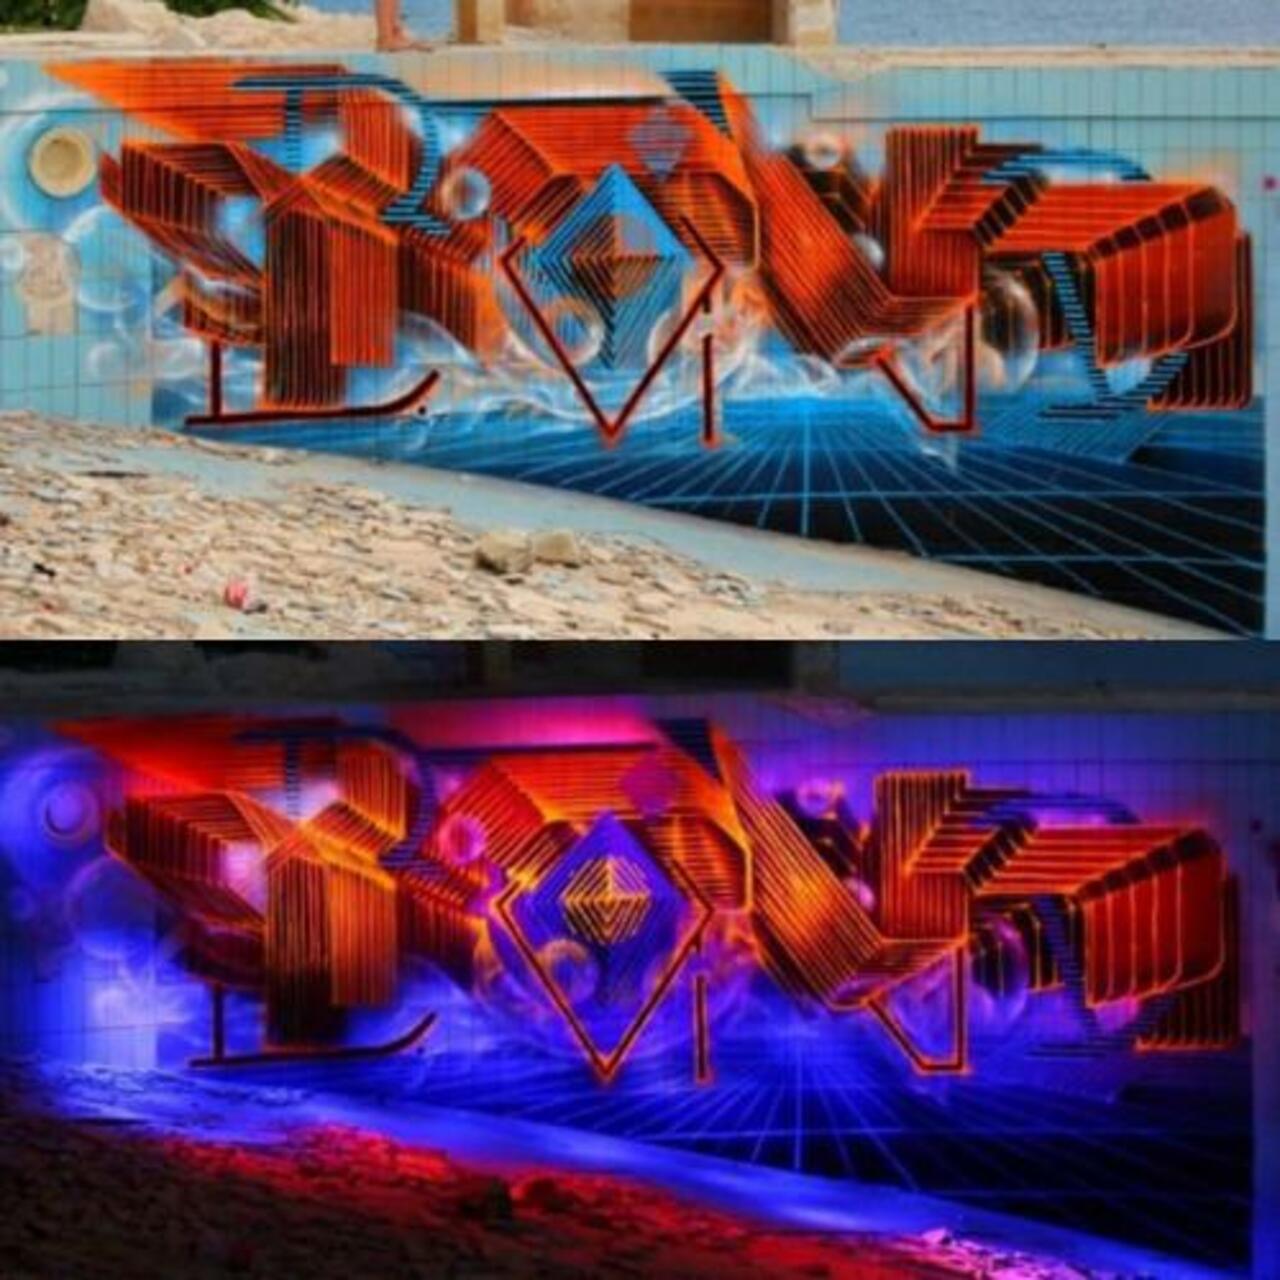 RT @bbbmagazine: Glow in the dark #streetart work by innovative German #graffiti artist #BondTruluv.

http://wp.me/p2dpFM-38F http://t.co/9dnHiZy1XR